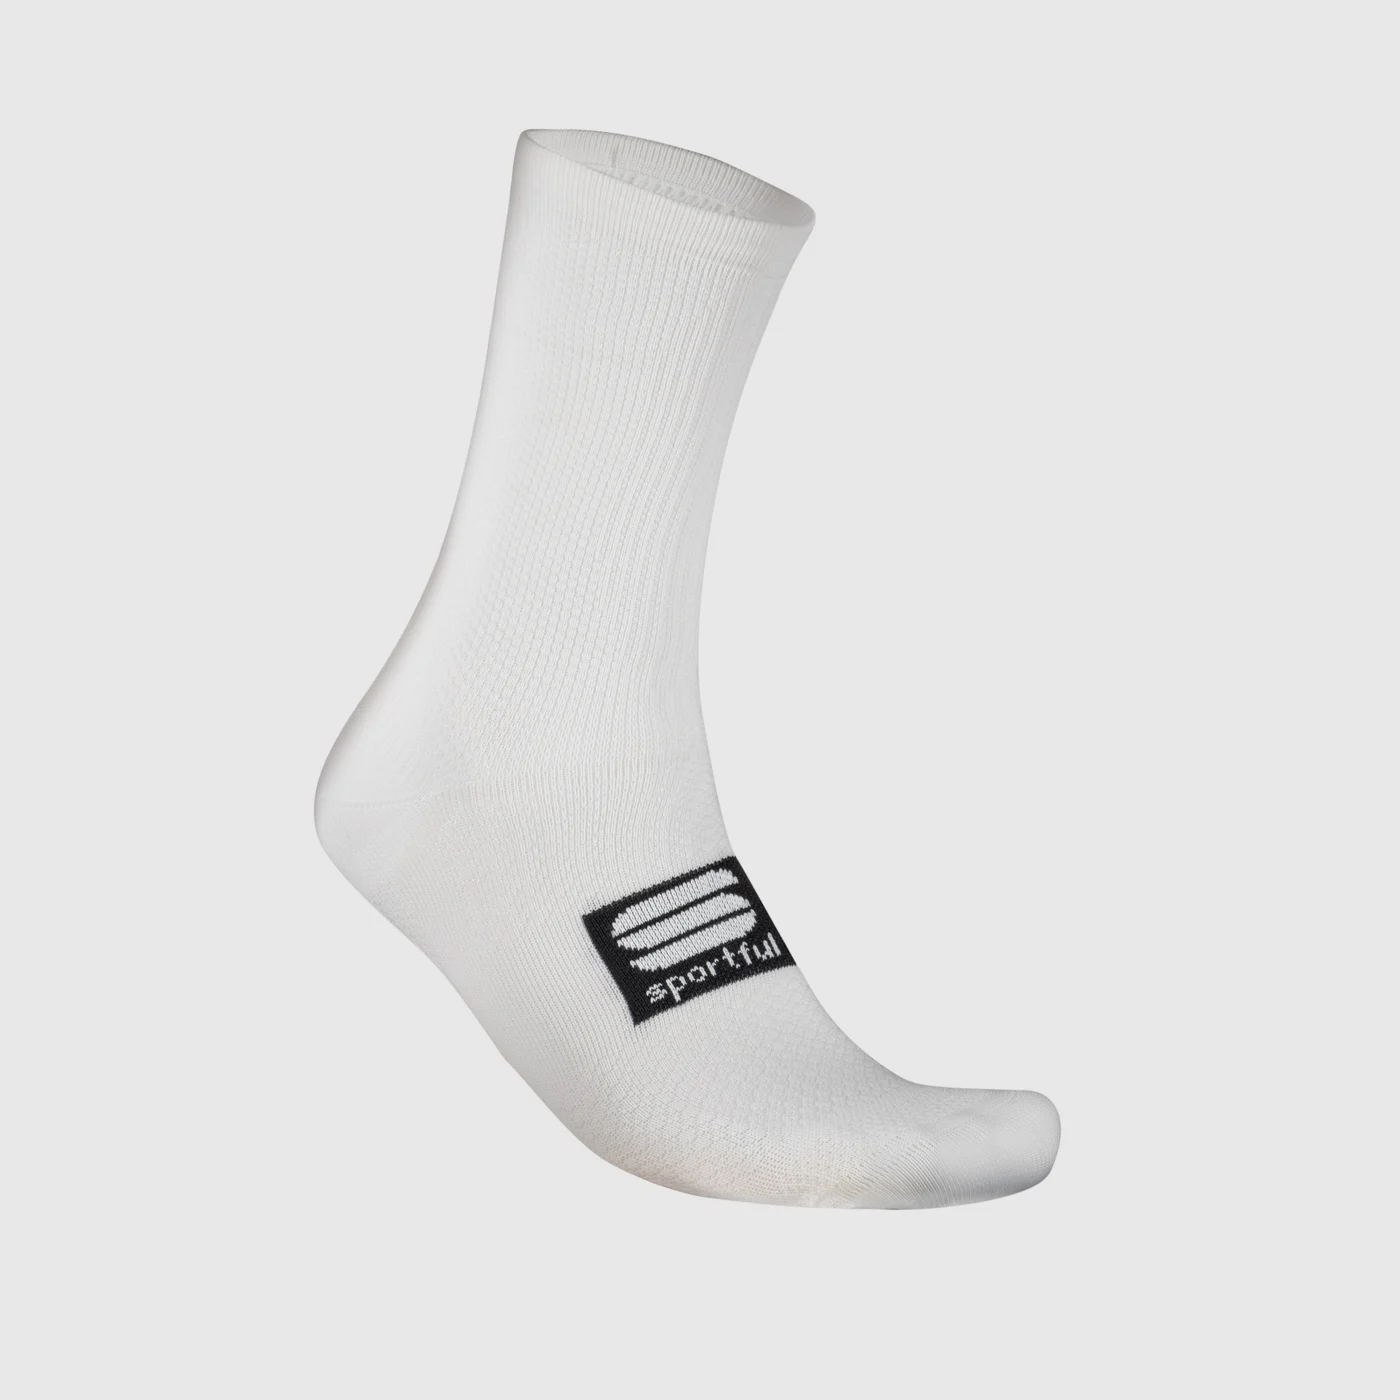 Sportful Pro Socks